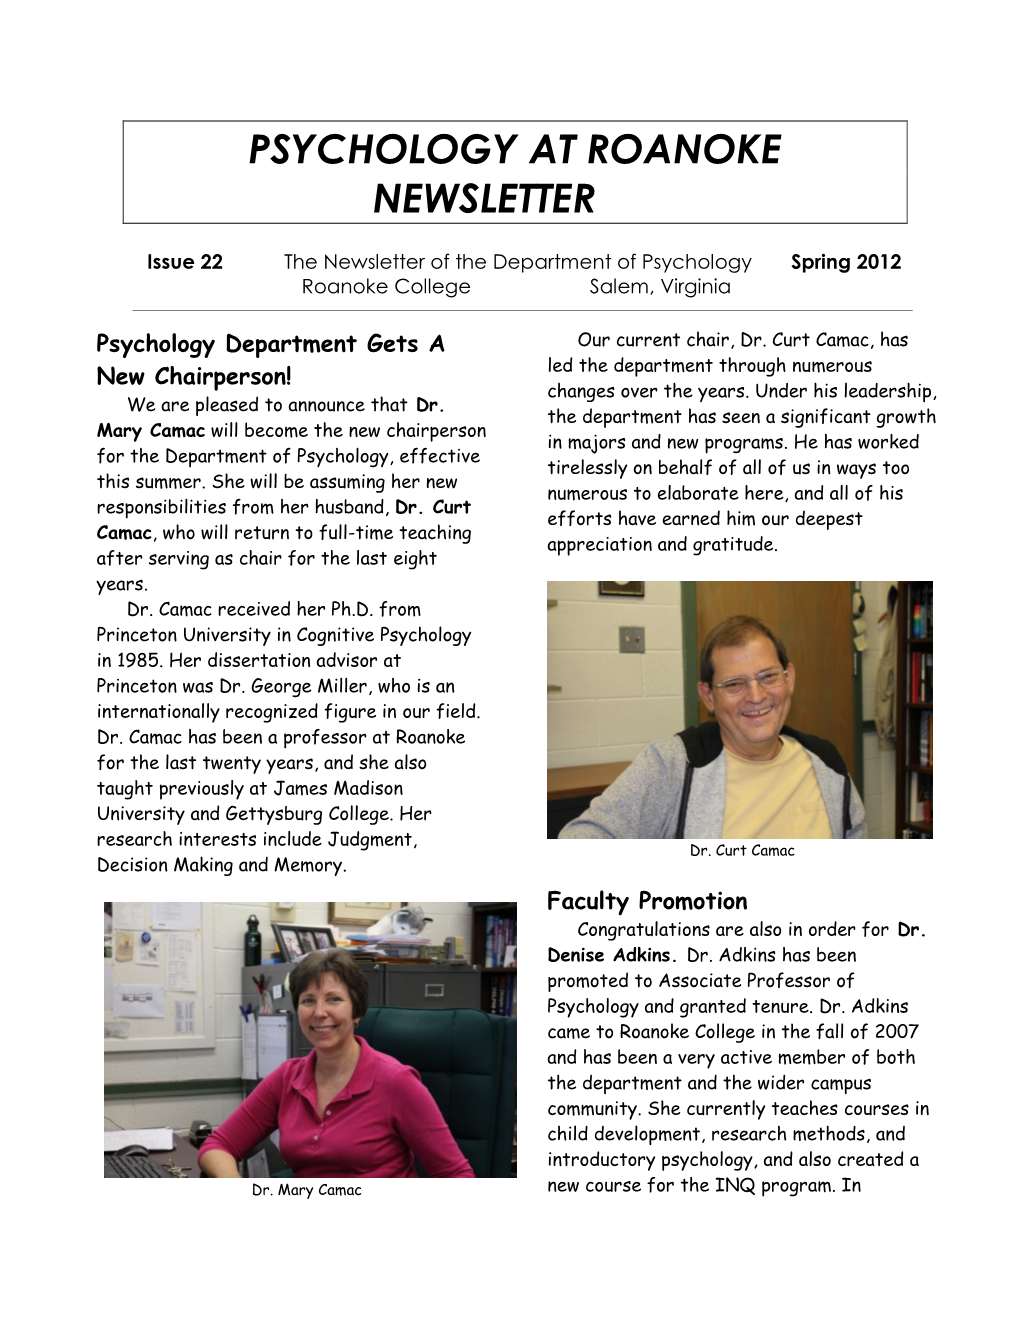 Psychology at Roanoke Newsletter